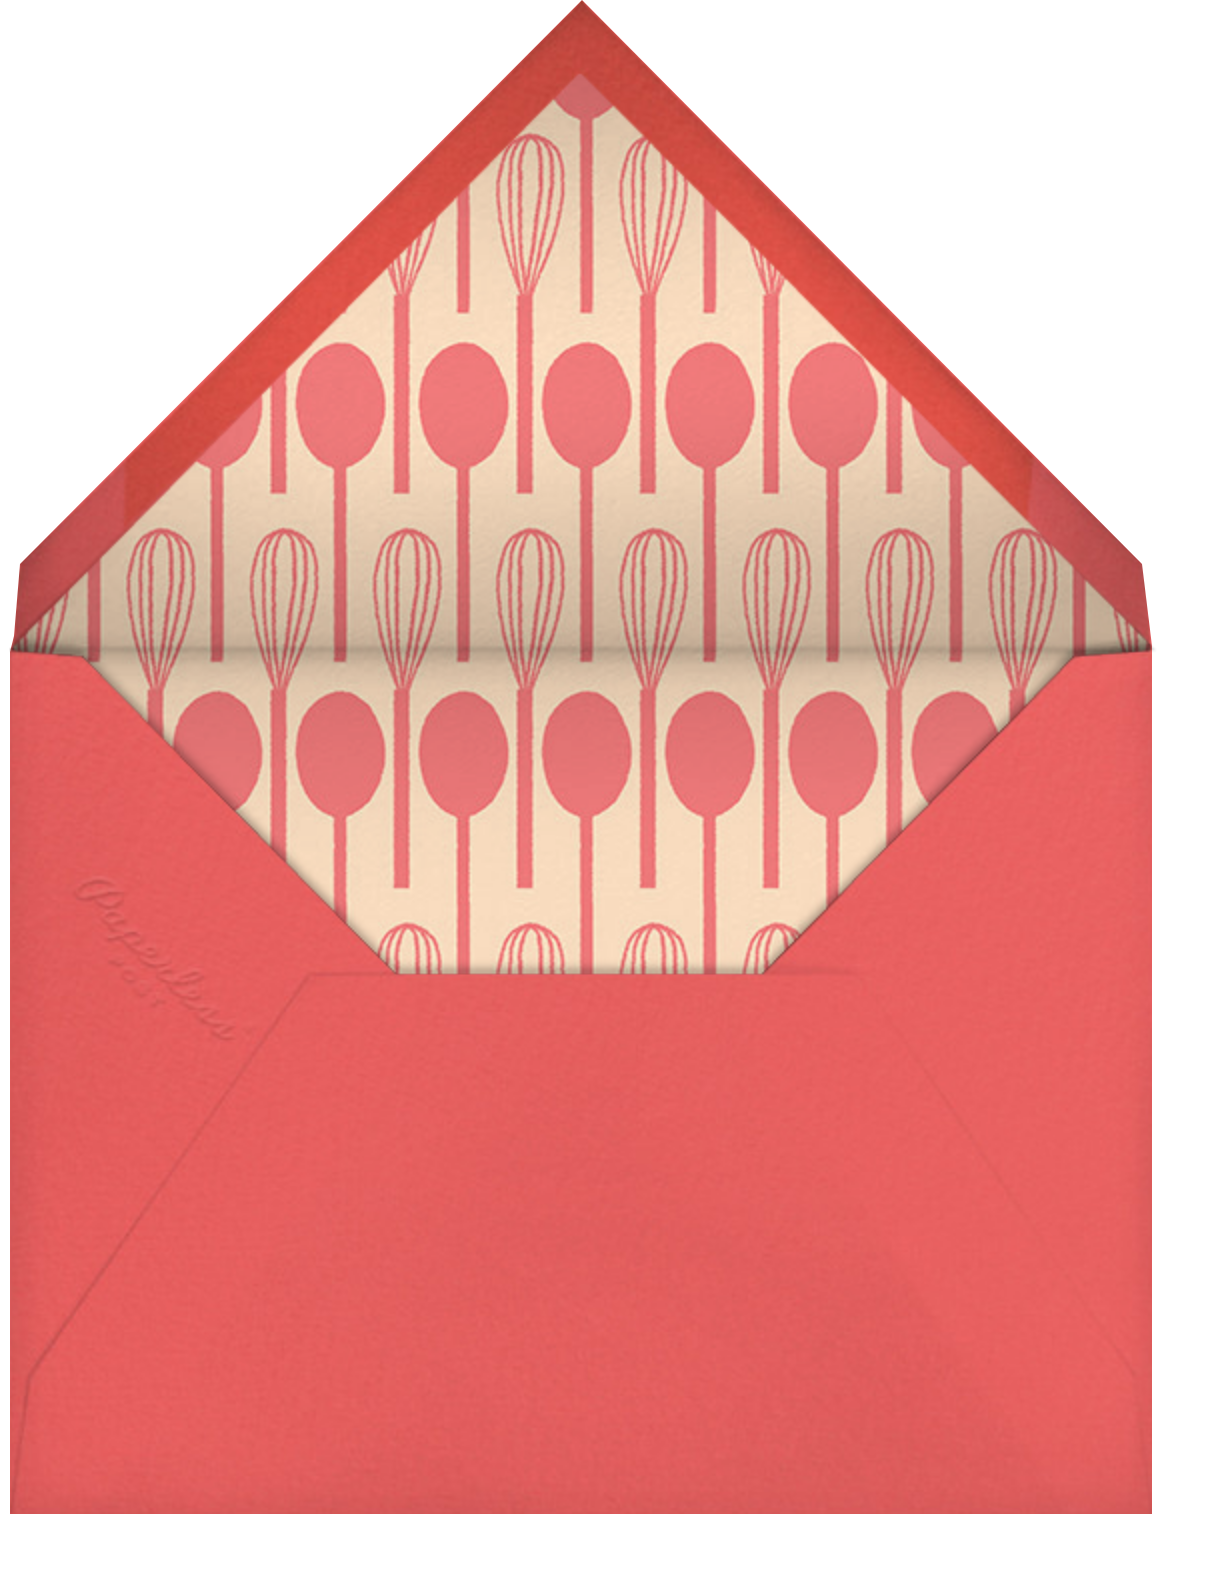 Apron Strings - Paperless Post - Envelope